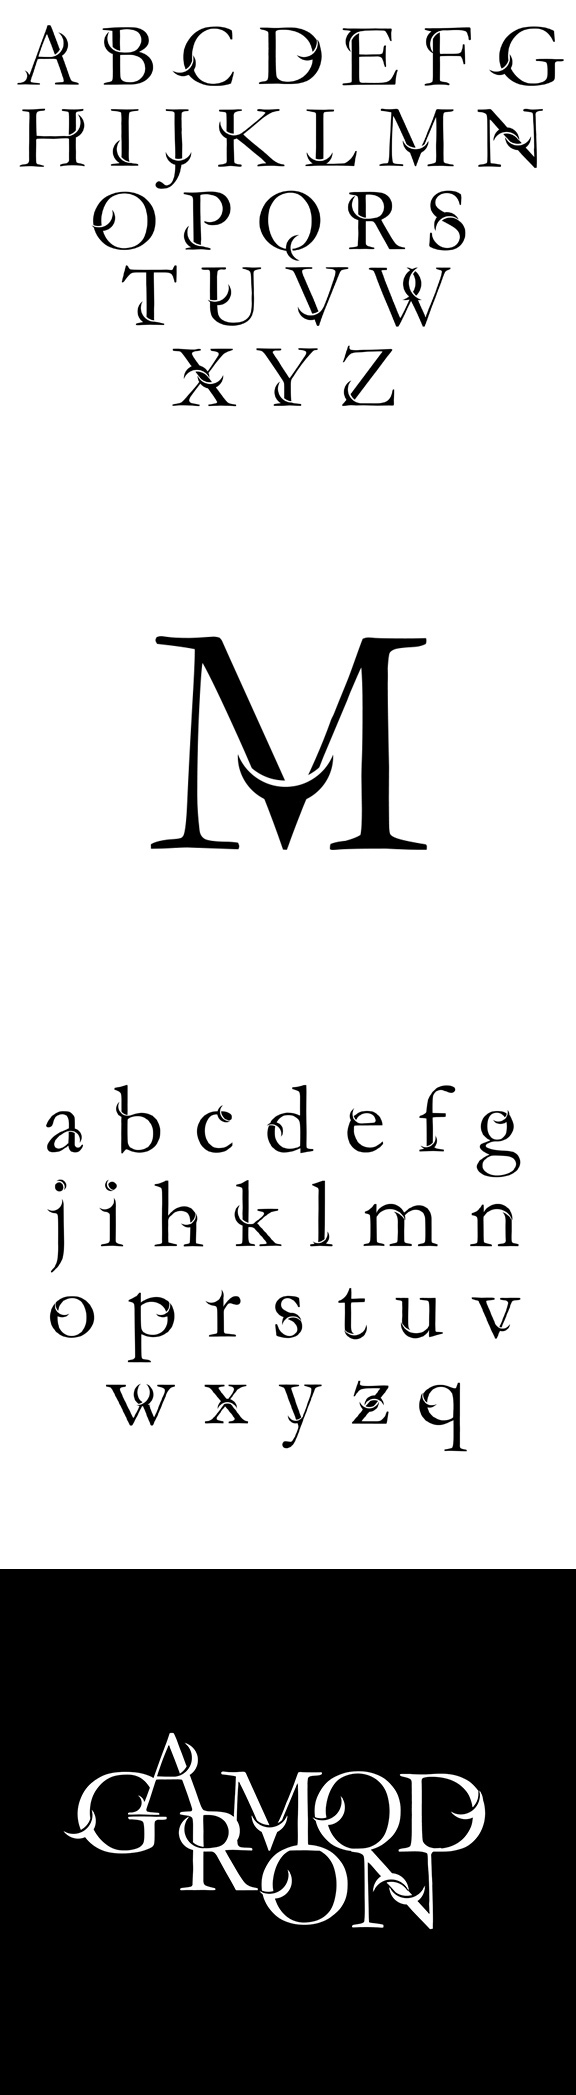 Typeface font logo moon letters typo idea garmond symbol Cat luna concept student